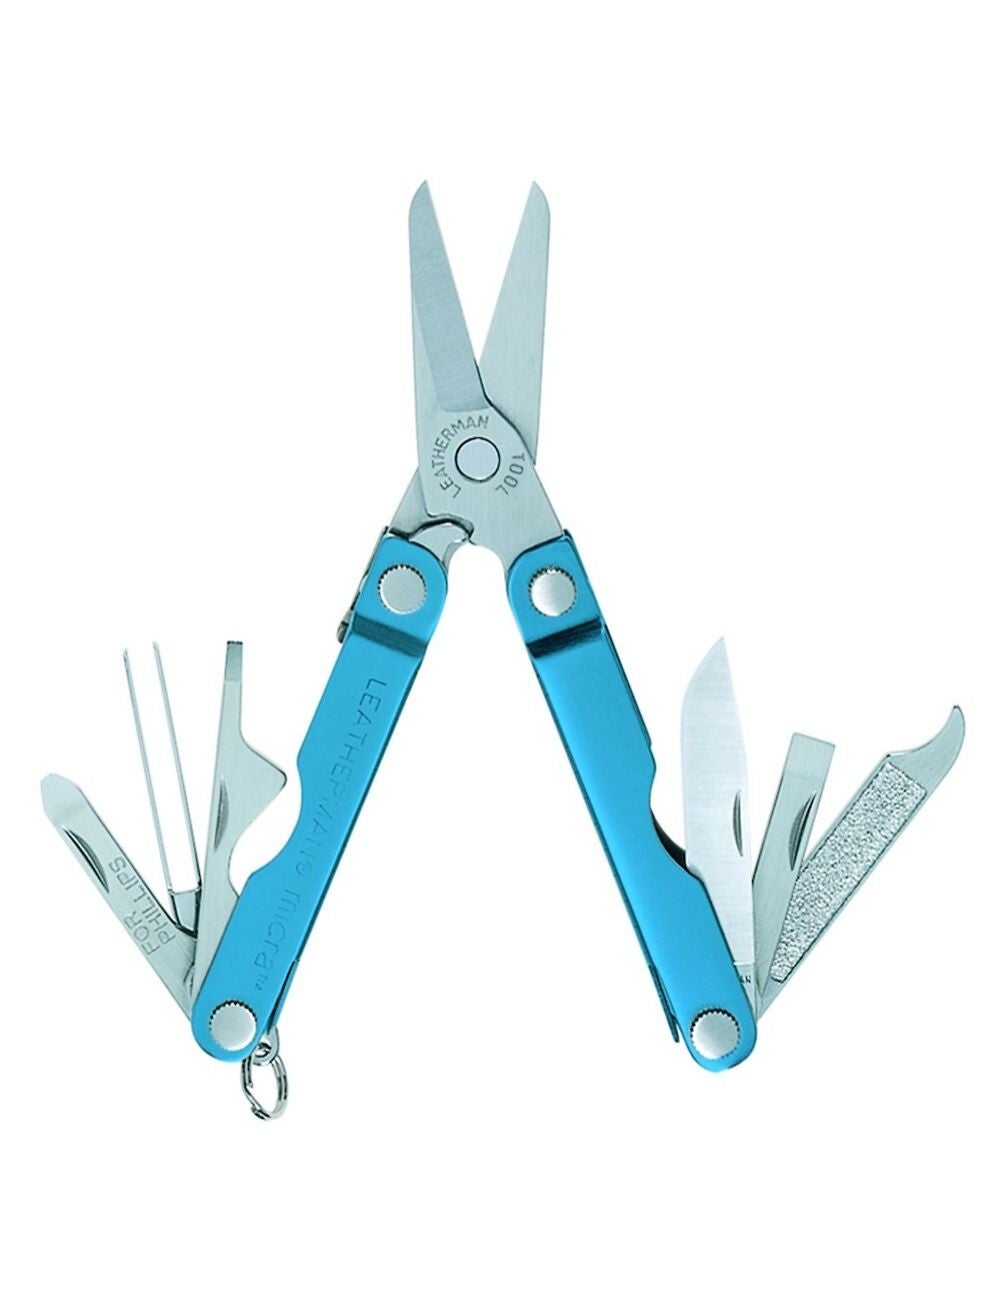 Leatherman Micra Blue Stainless Multi-Tool Scissors Knife